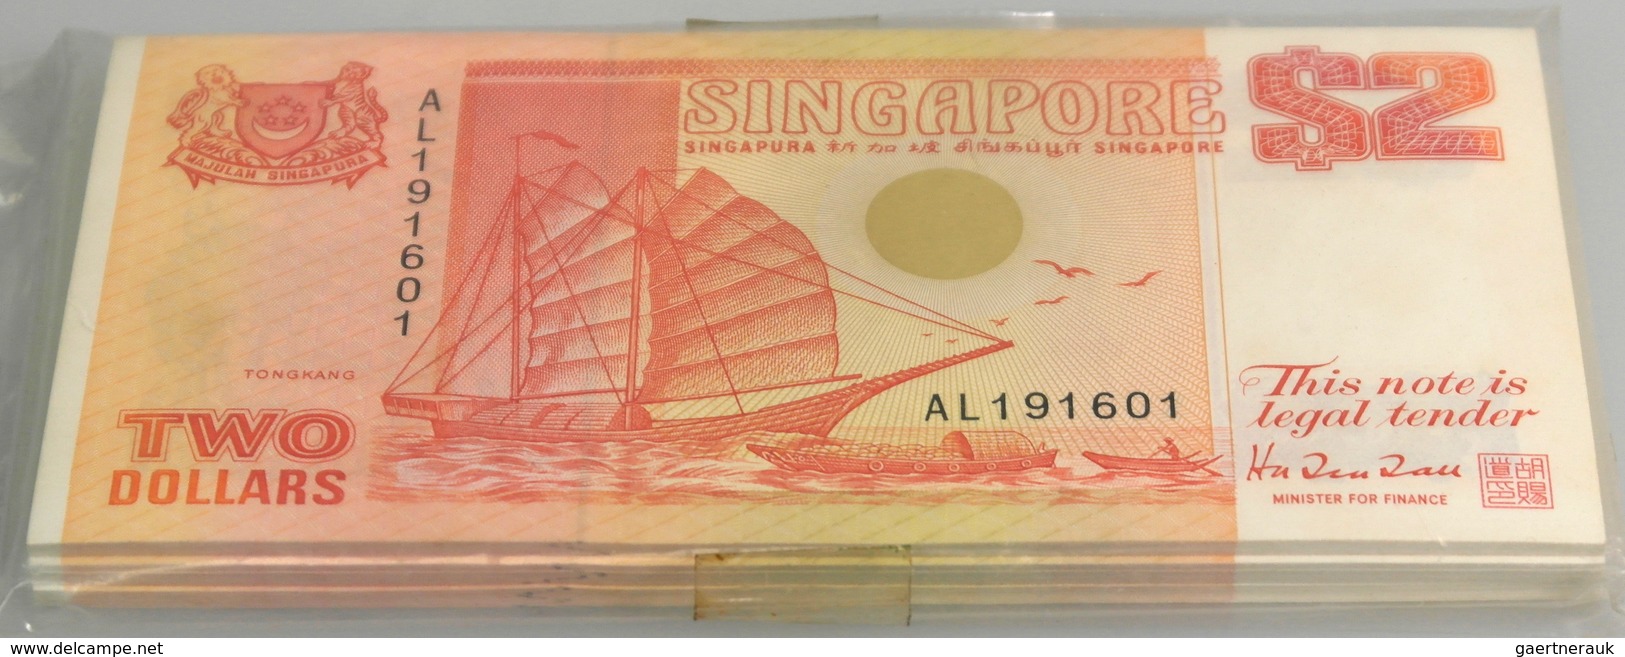 02849 Singapore / Singapur: Origial Bundle Of 100 Pcs 2 Dollars ND P. 27 In UNC. (100 Pcs) - Singapore